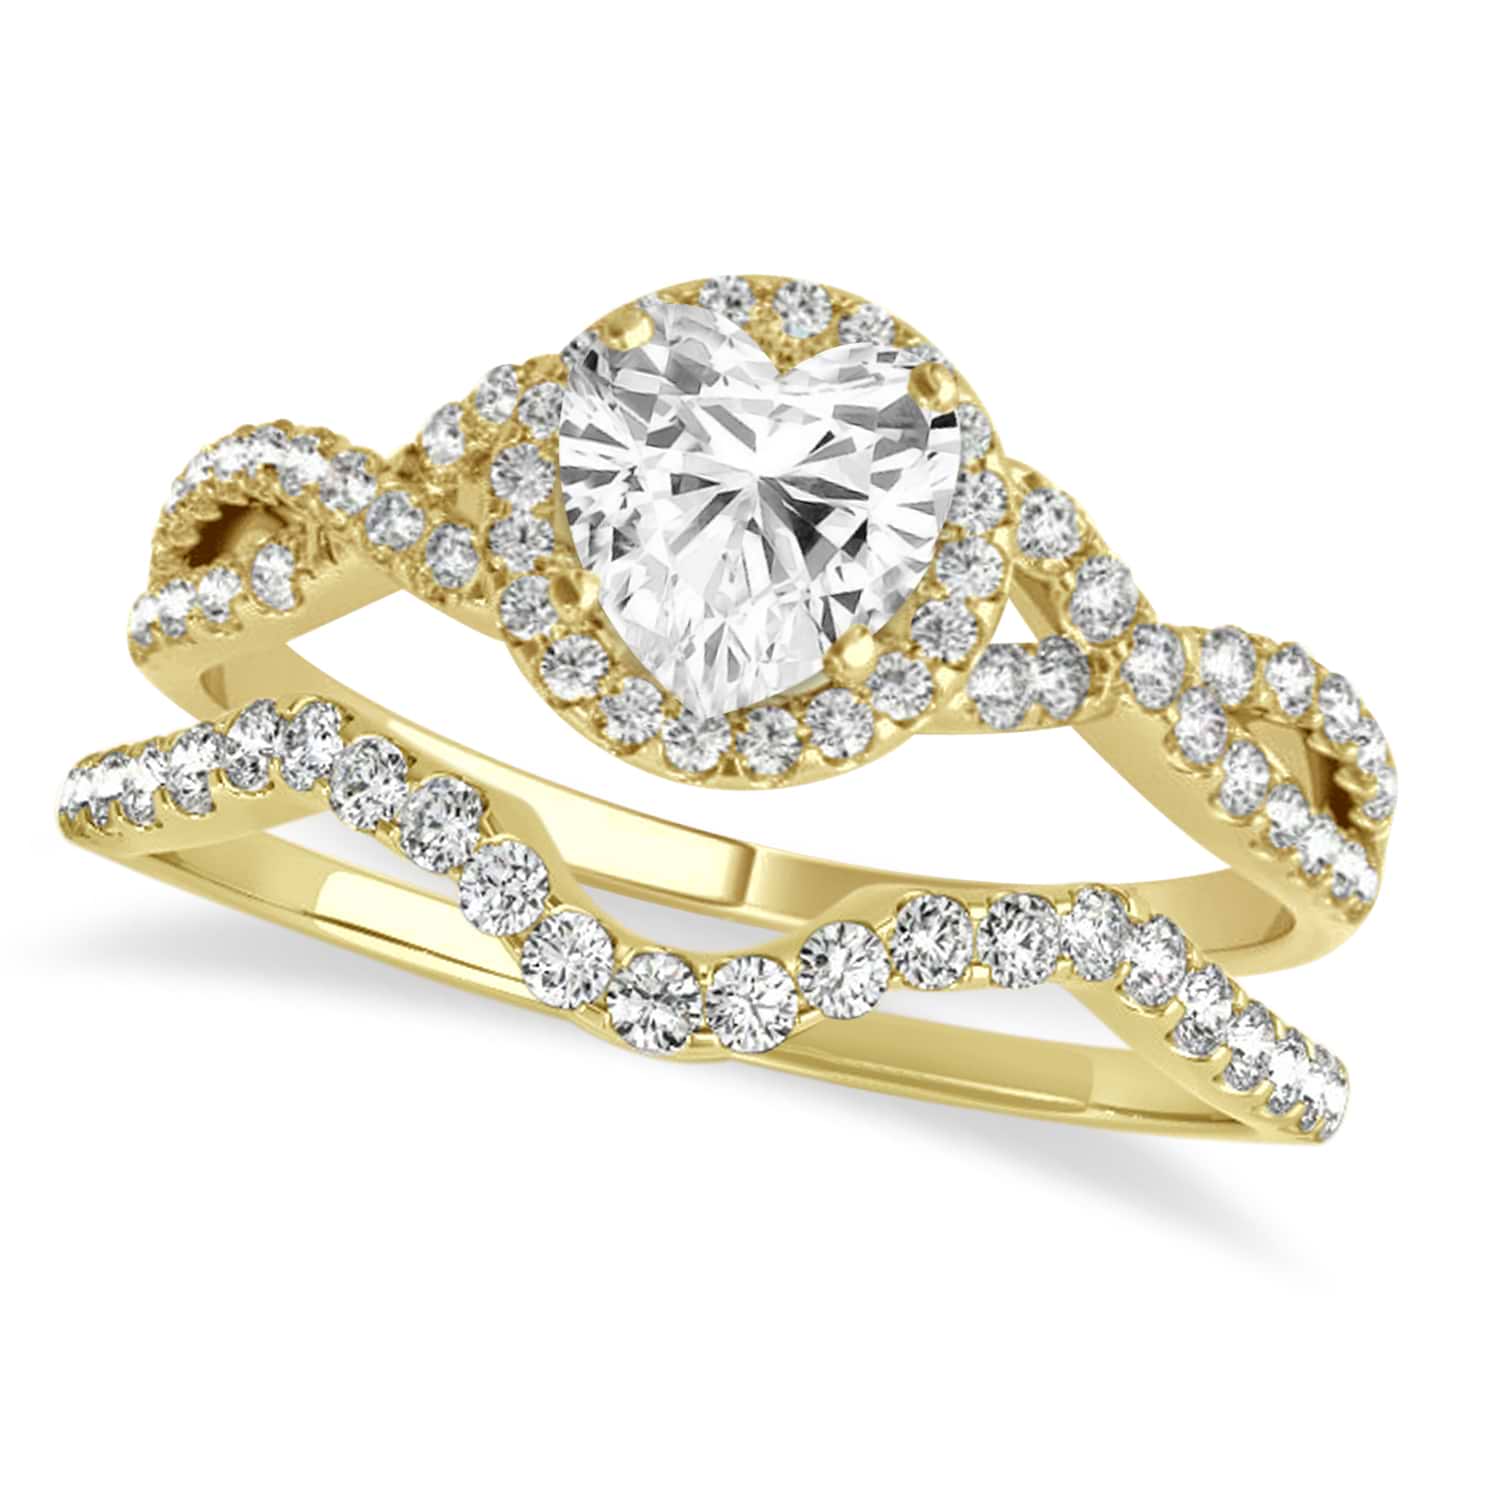 Twisted Heart Diamond Engagement Ring Bridal Set 14k Yellow Gold (1.57ct)